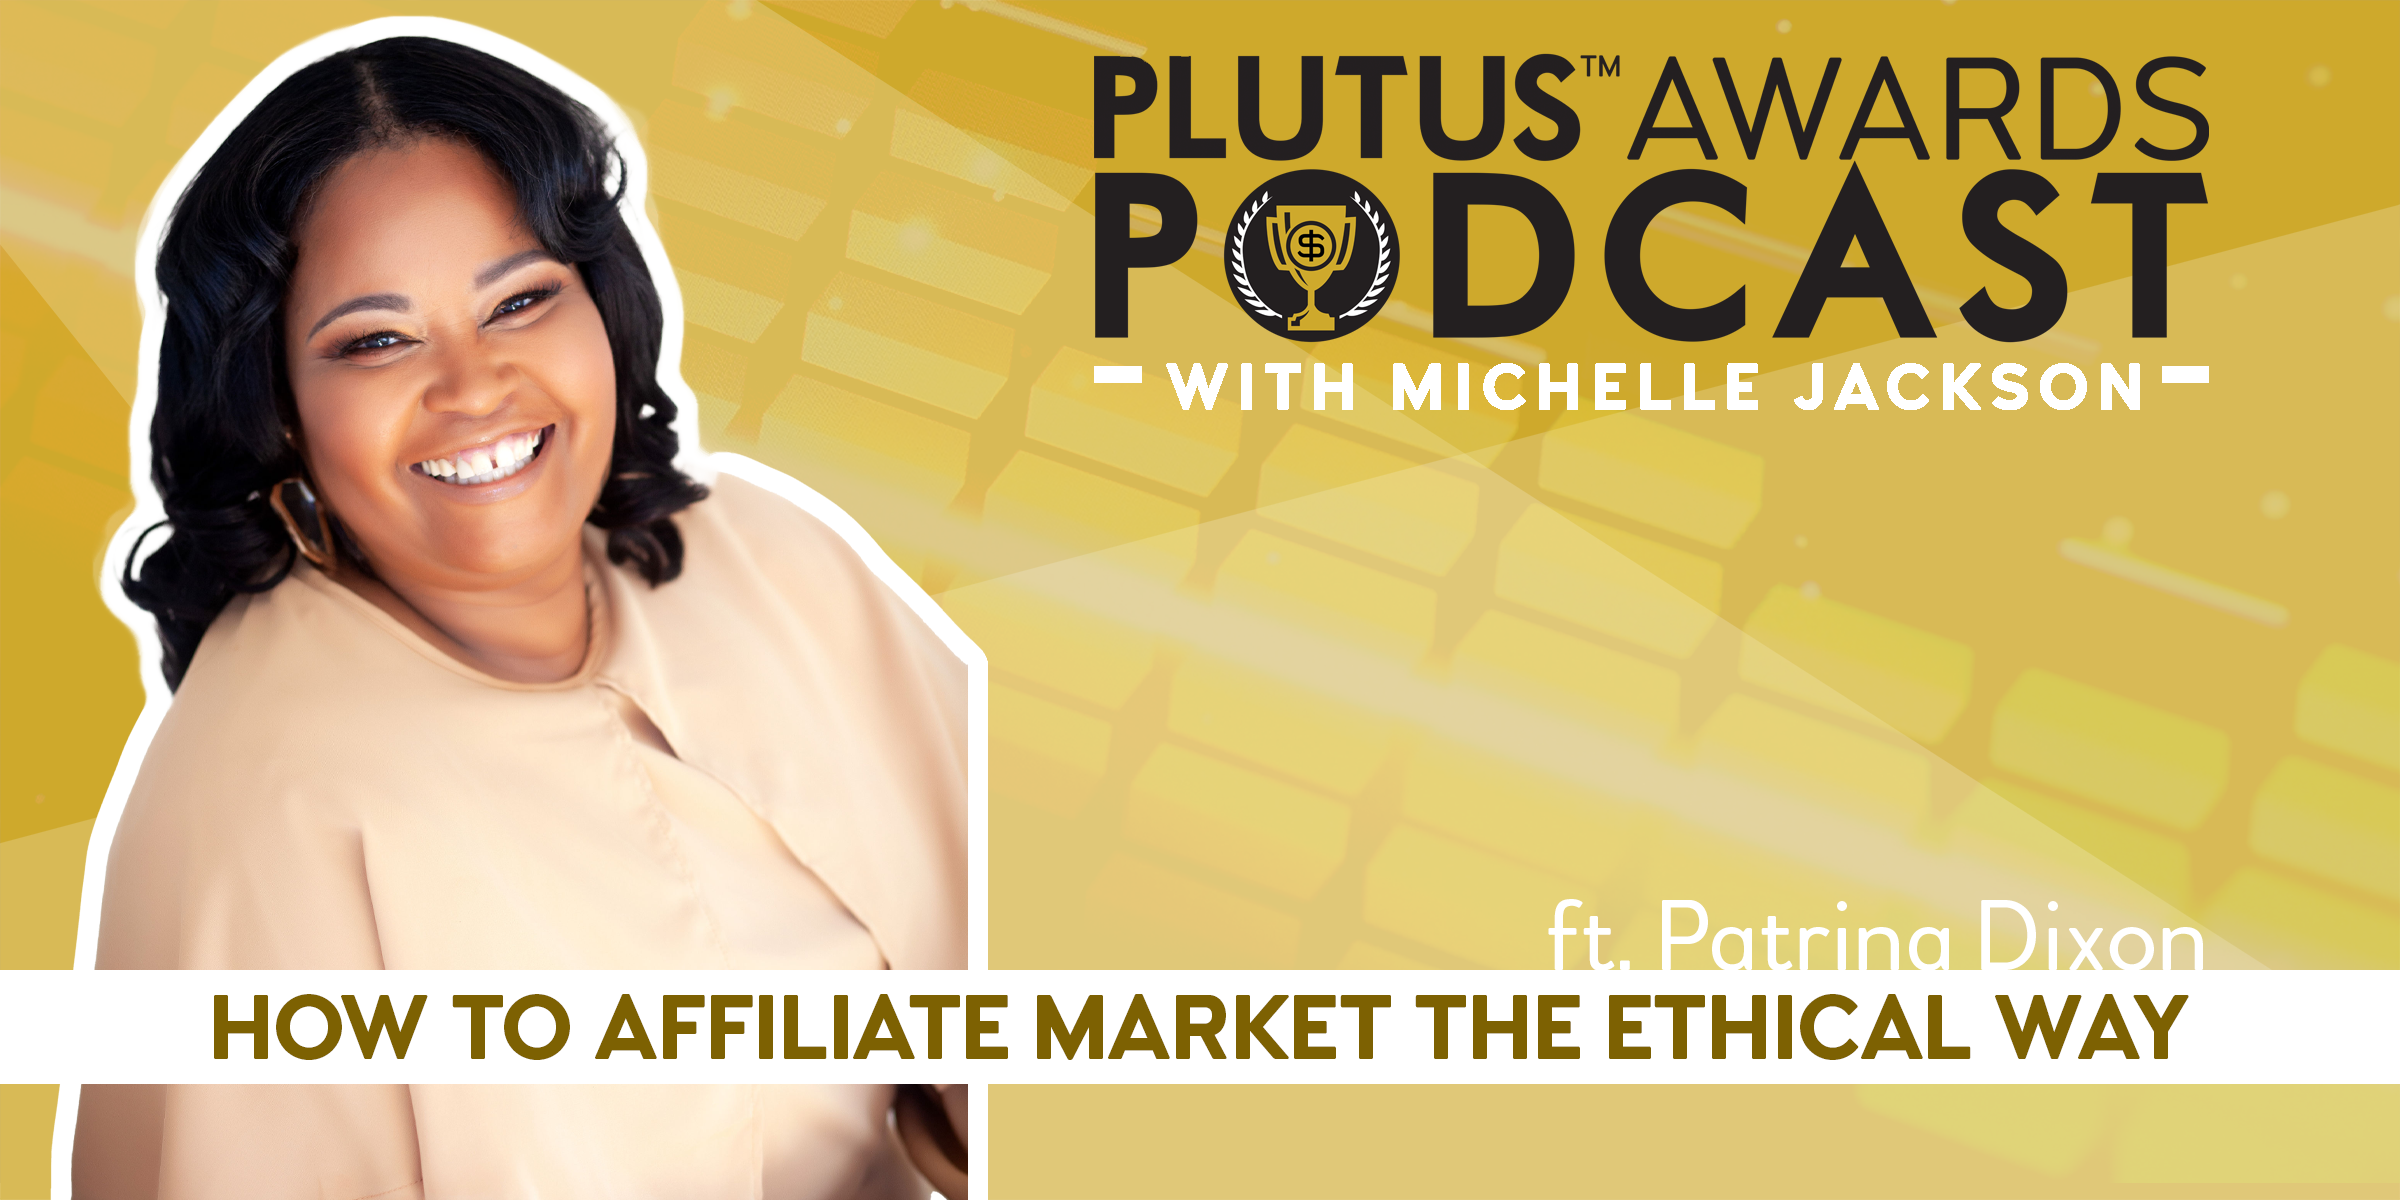 Plutus Awards Podcast - Patrina Dixon Featured Image